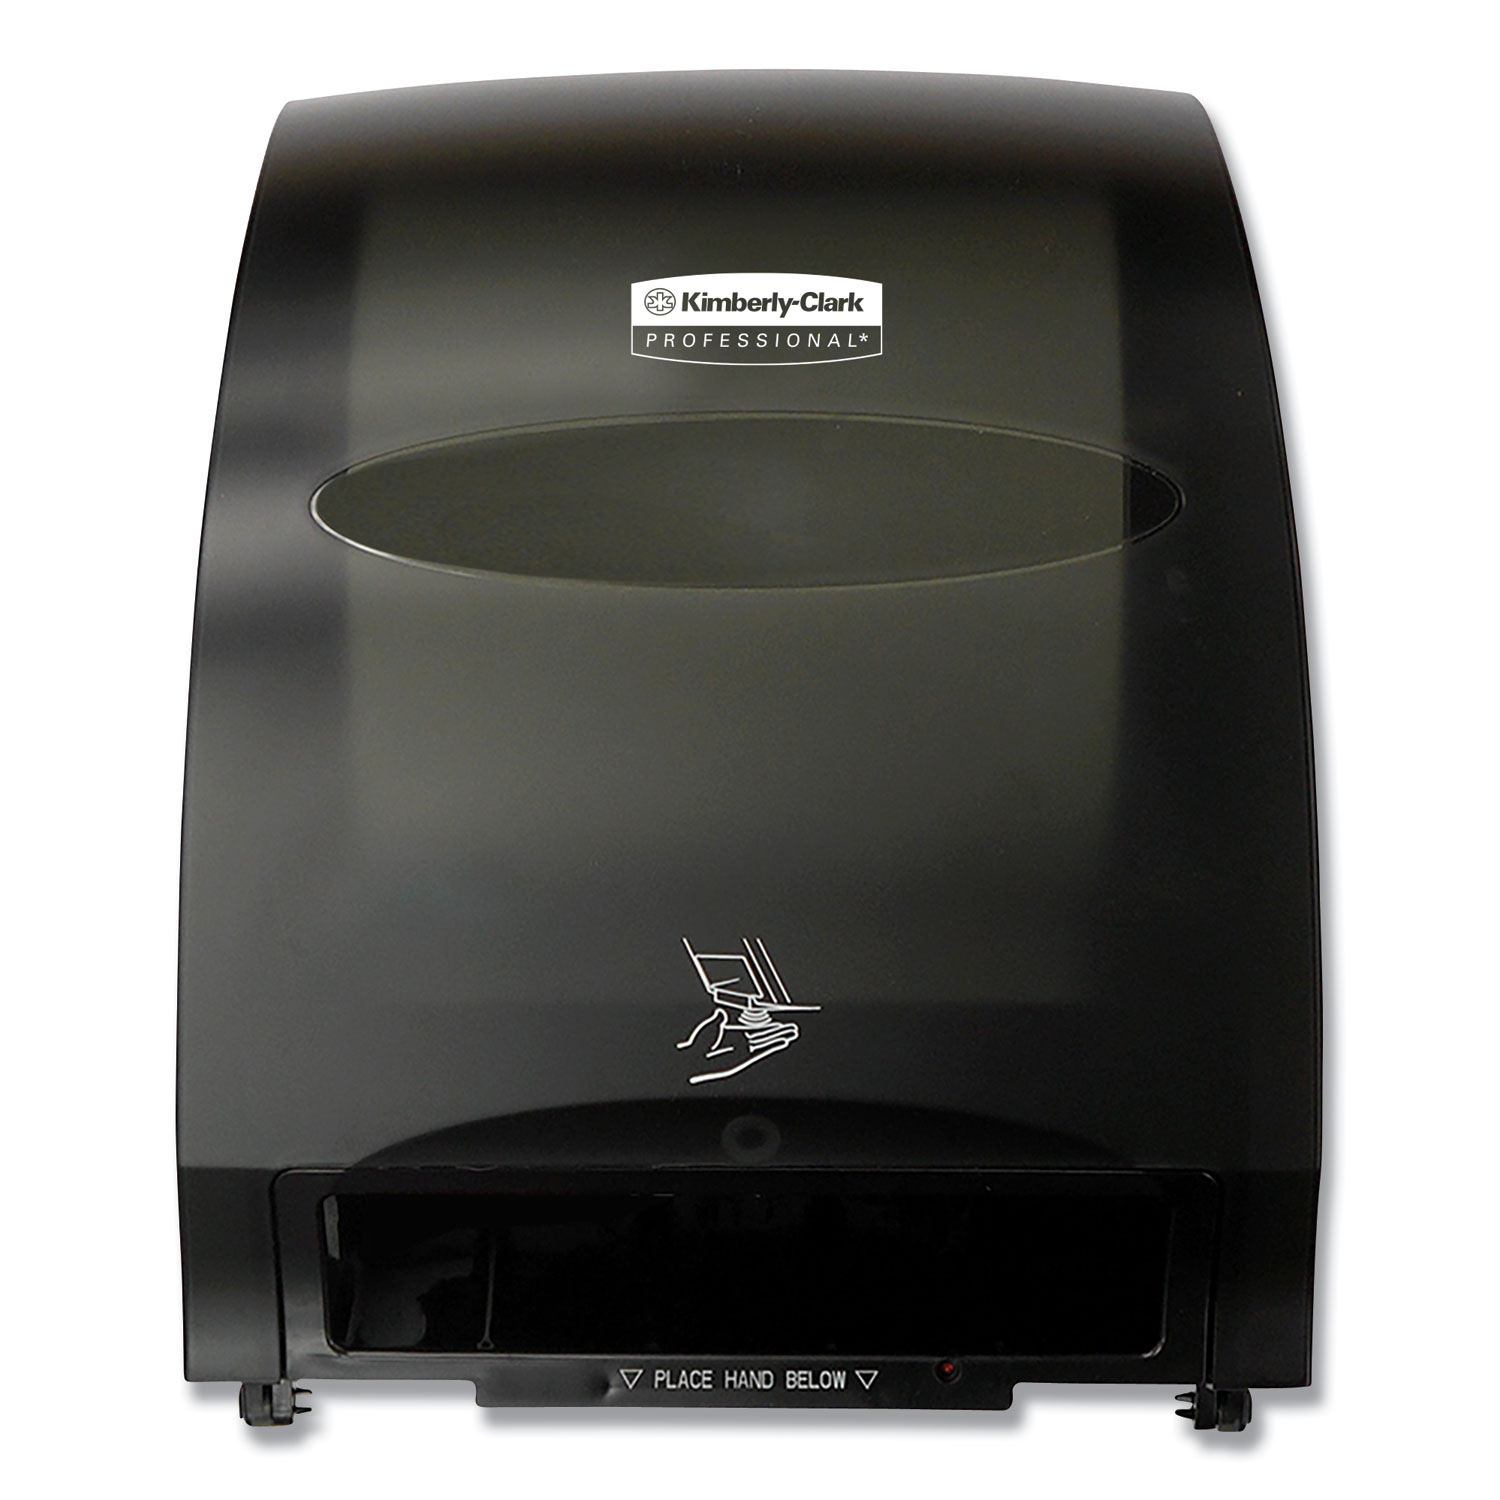 Kimberly-Clark Professional™ Electronic Hard Roll Towel Dispenser - Black, 12.70" x 15.76" x 9.57"